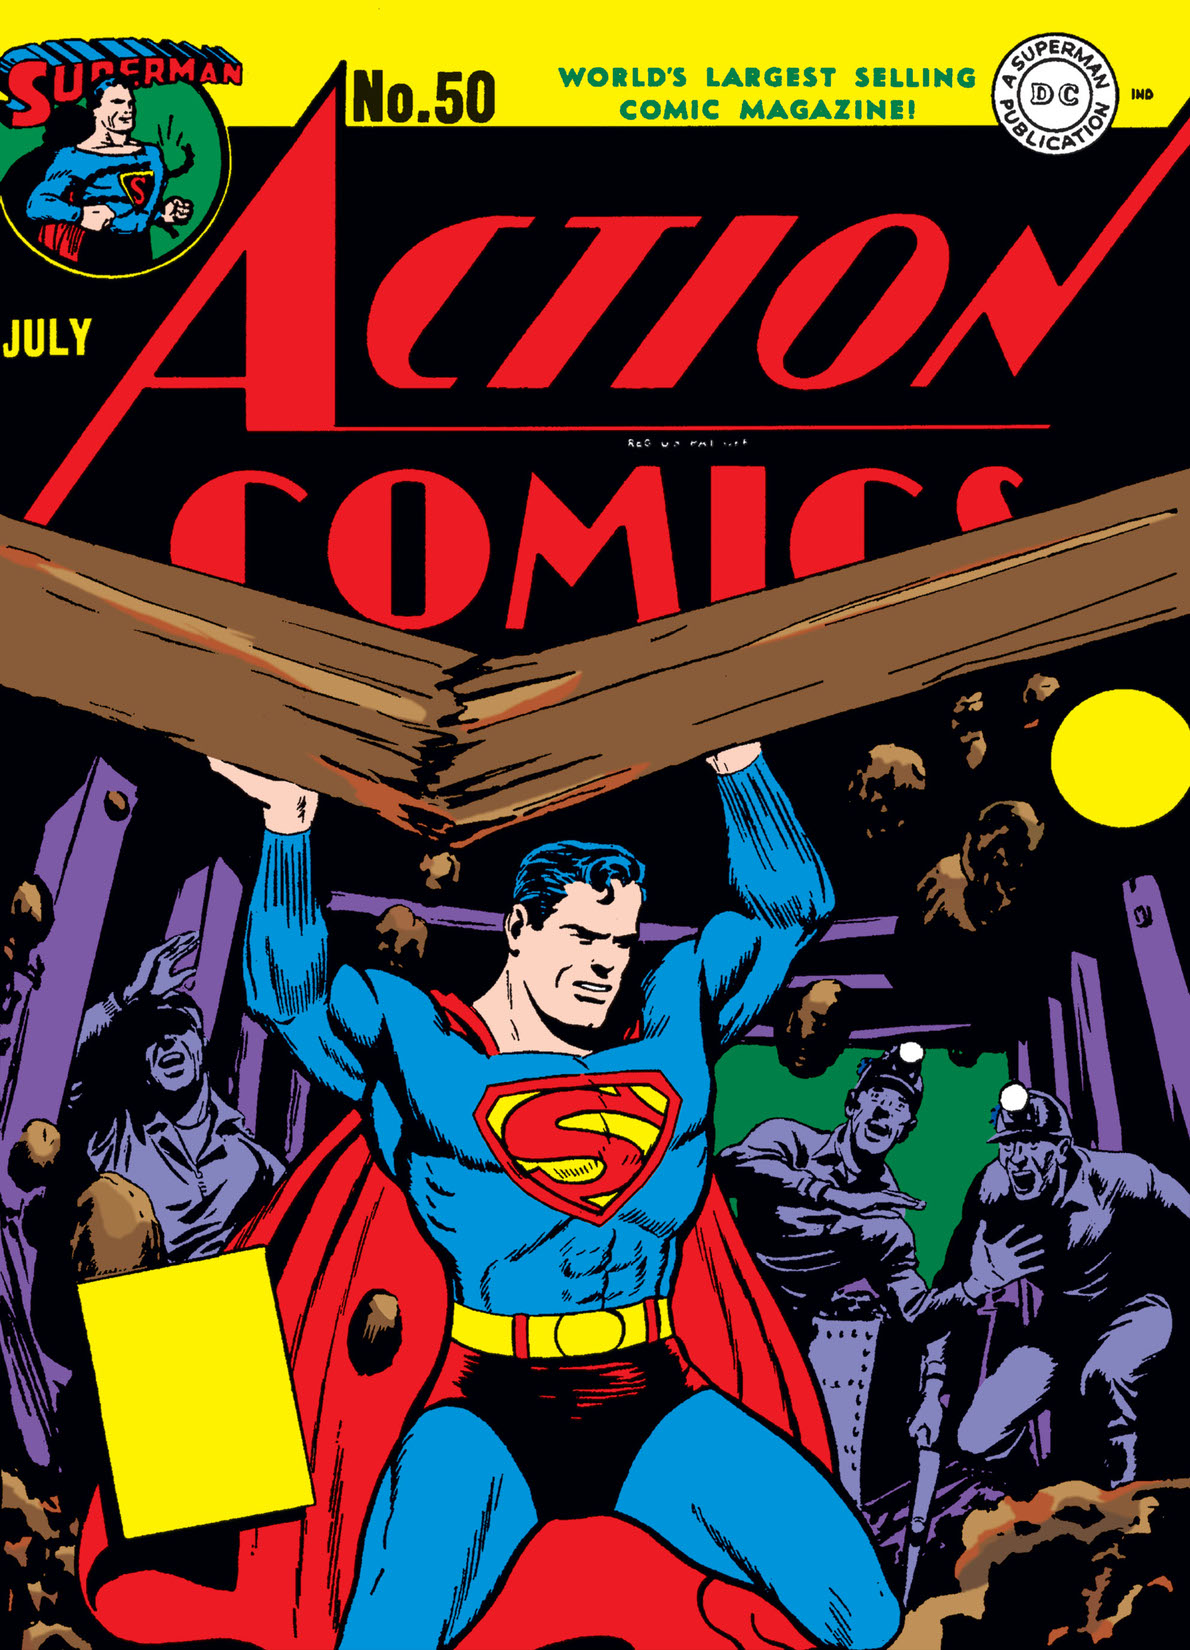 Action Comics (1938-) #50 preview images